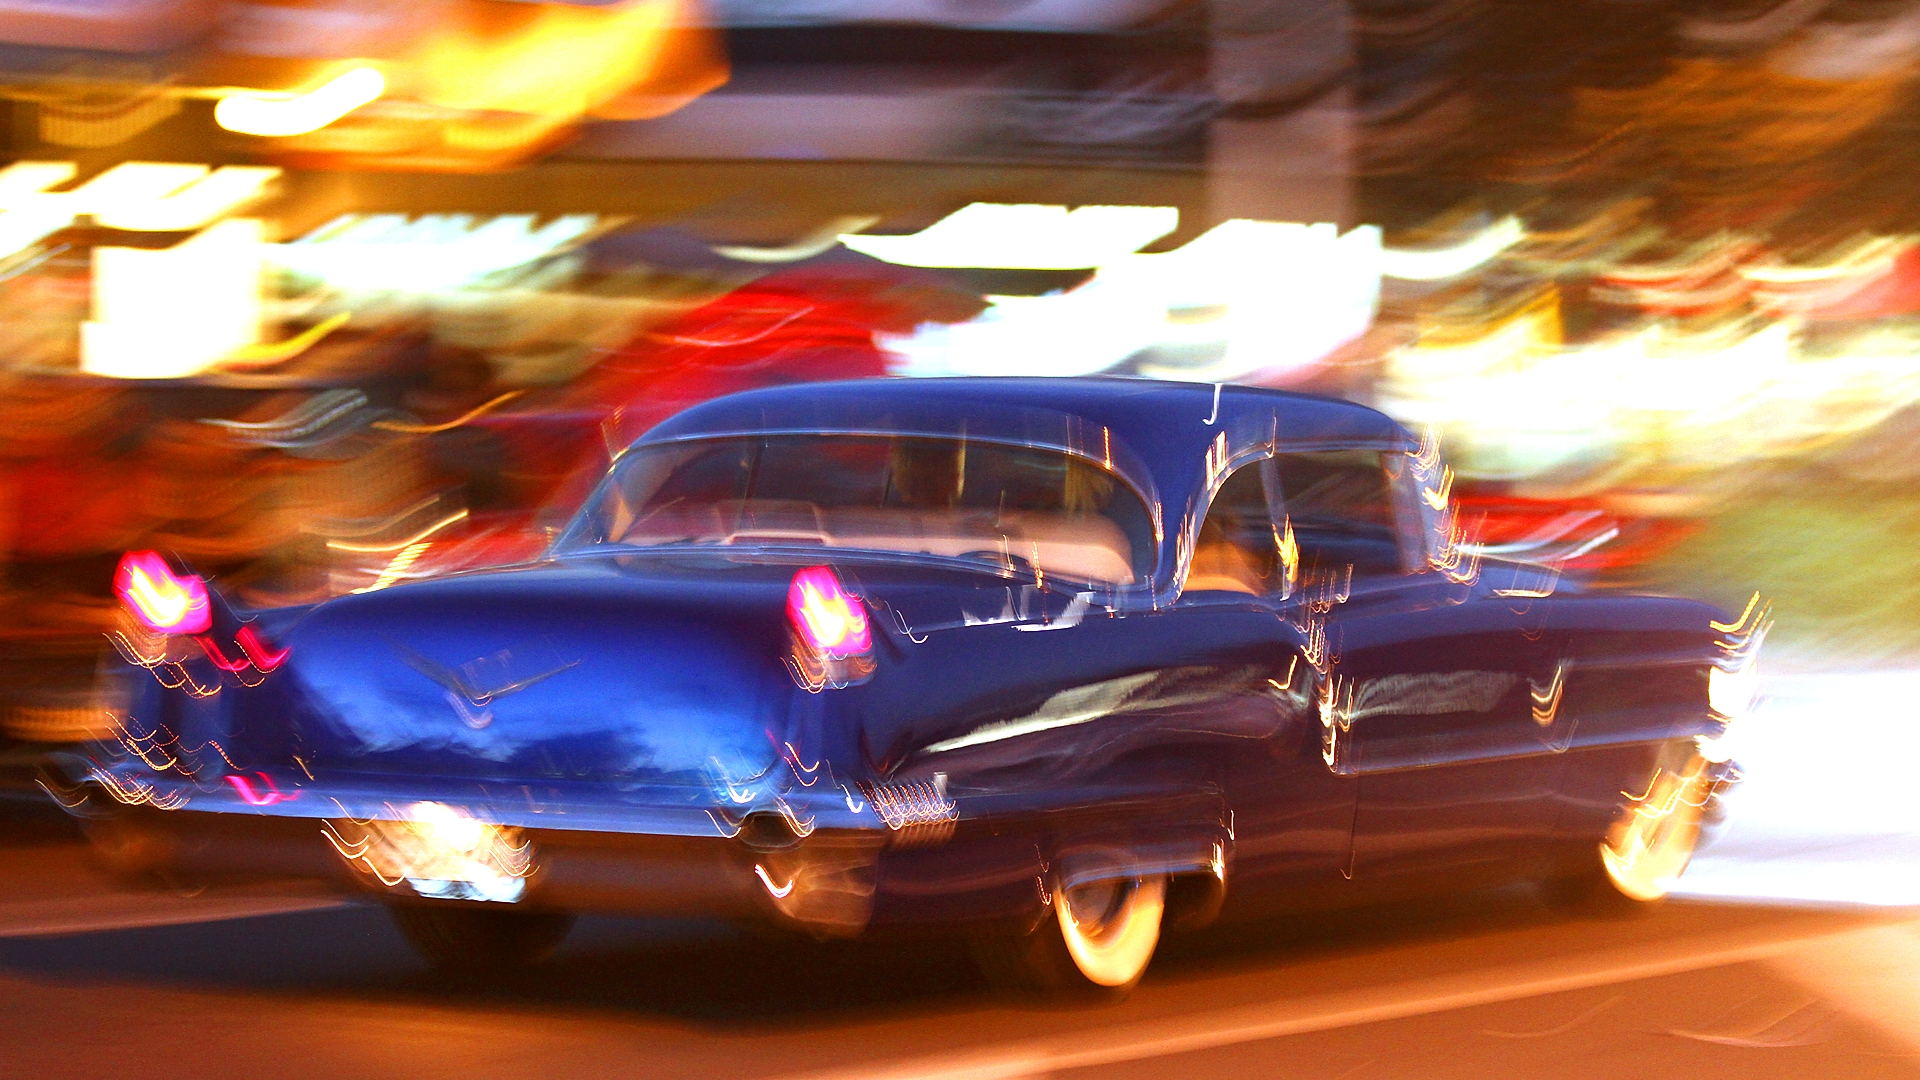 Vehicles 1956 Cadillac HD Wallpaper | Background Image